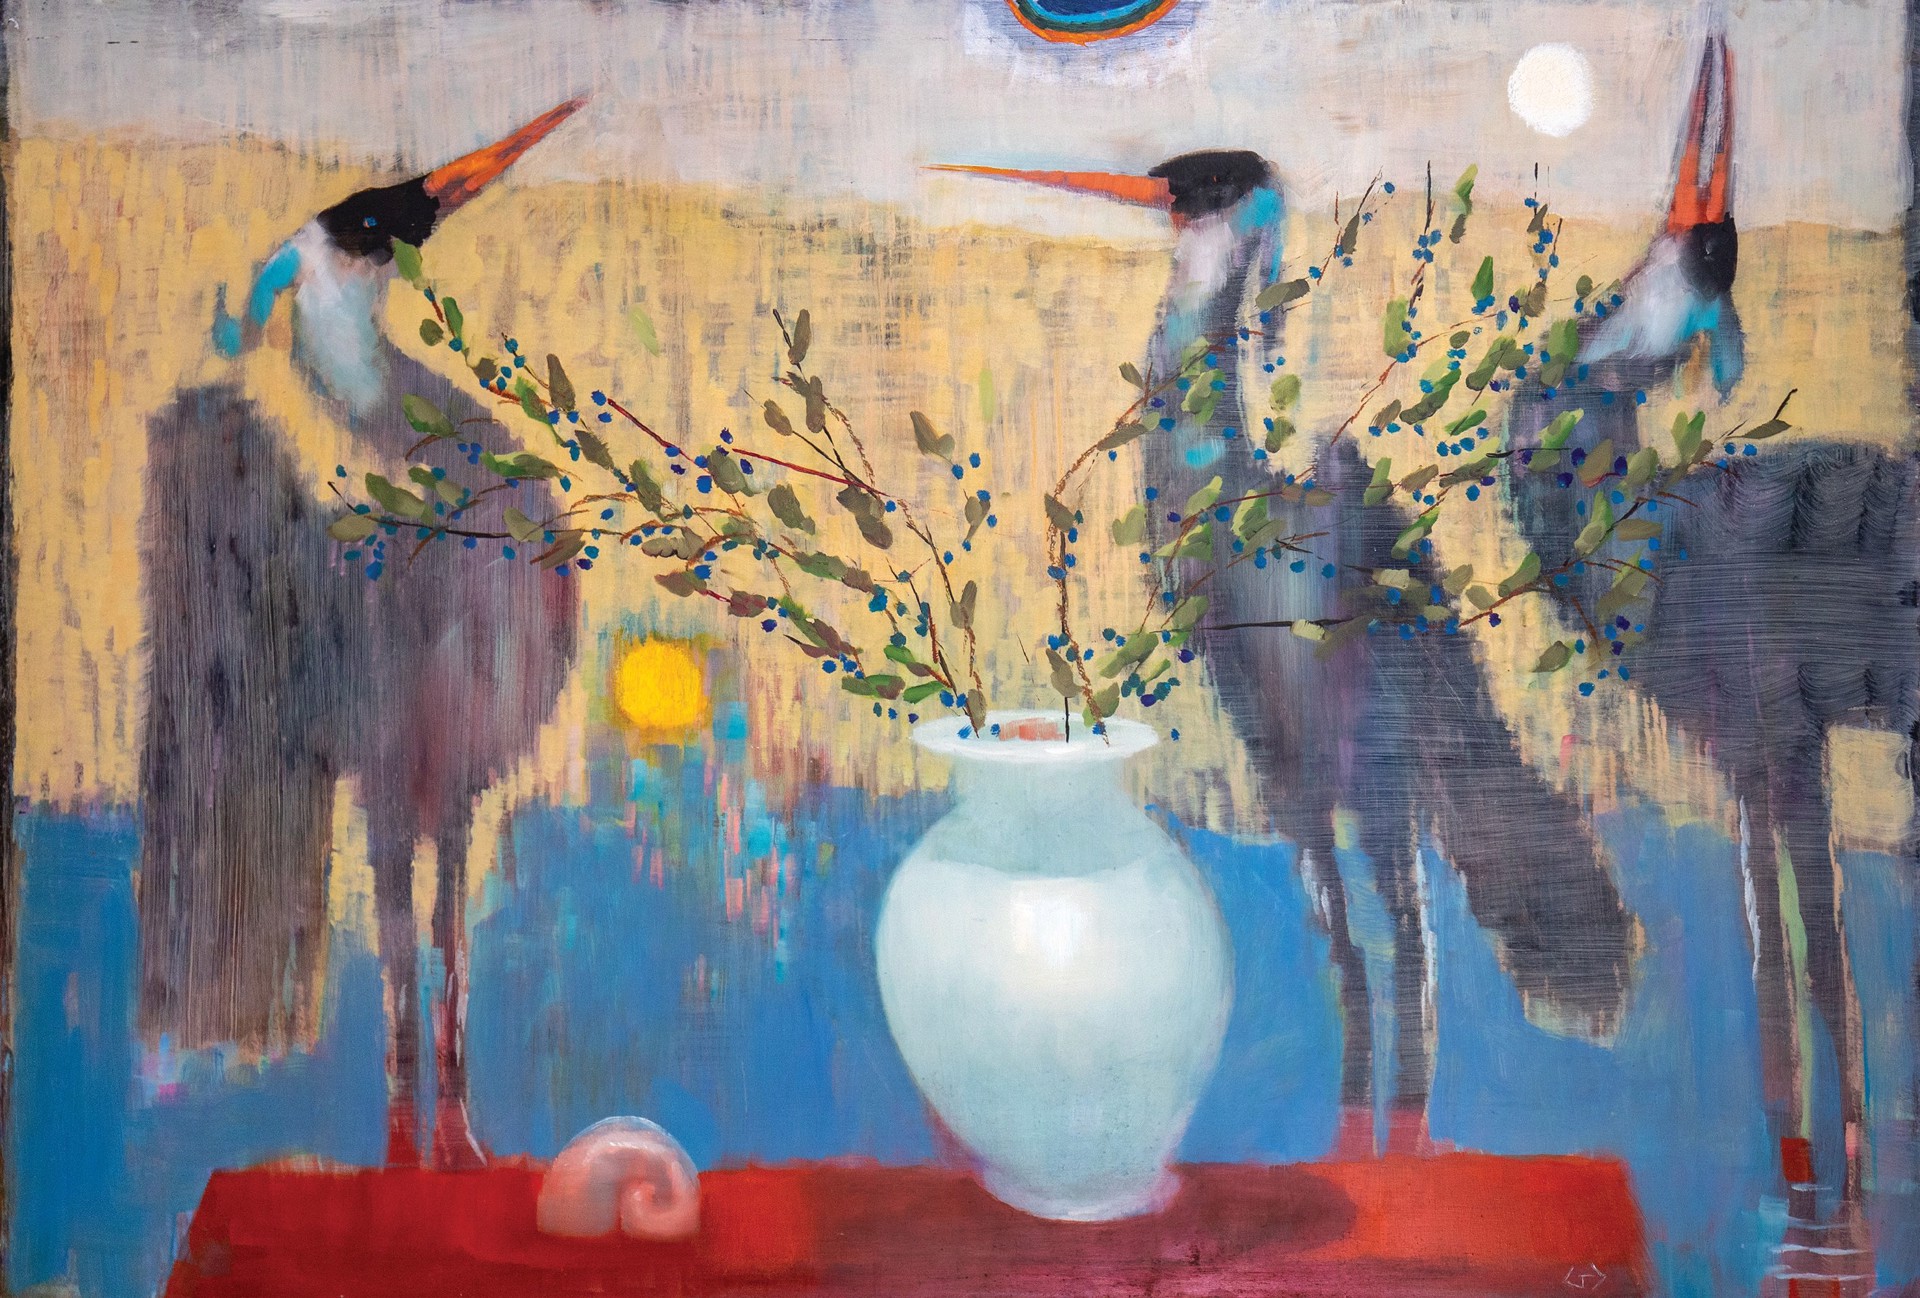 Three Cranes by Greg Decker